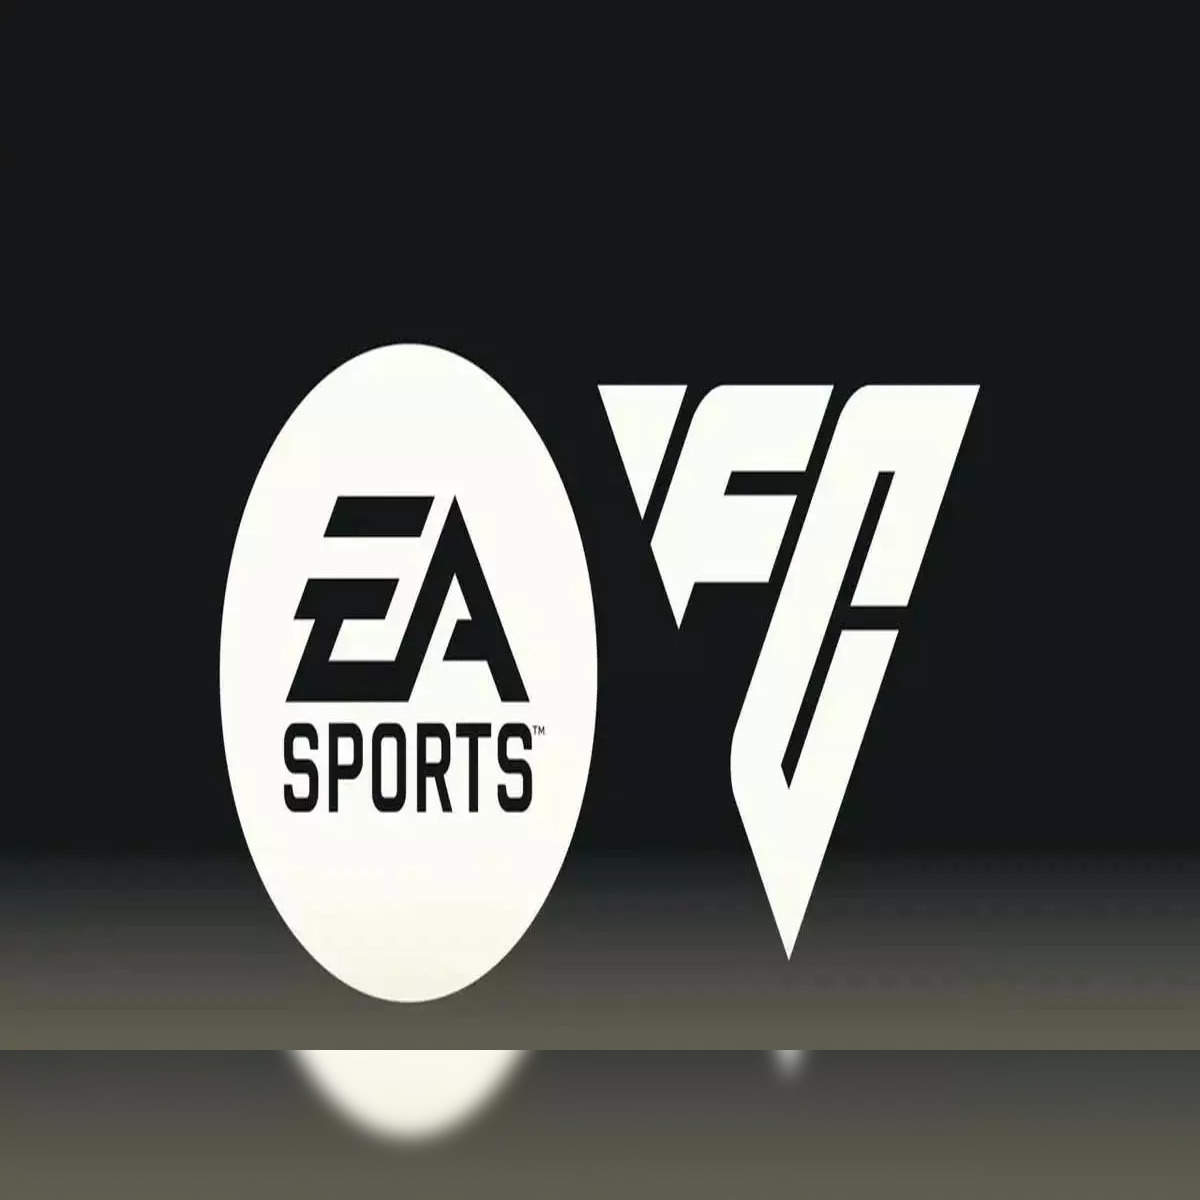 EA Sports FC (PC) Key cheap - Price of $ for Origin